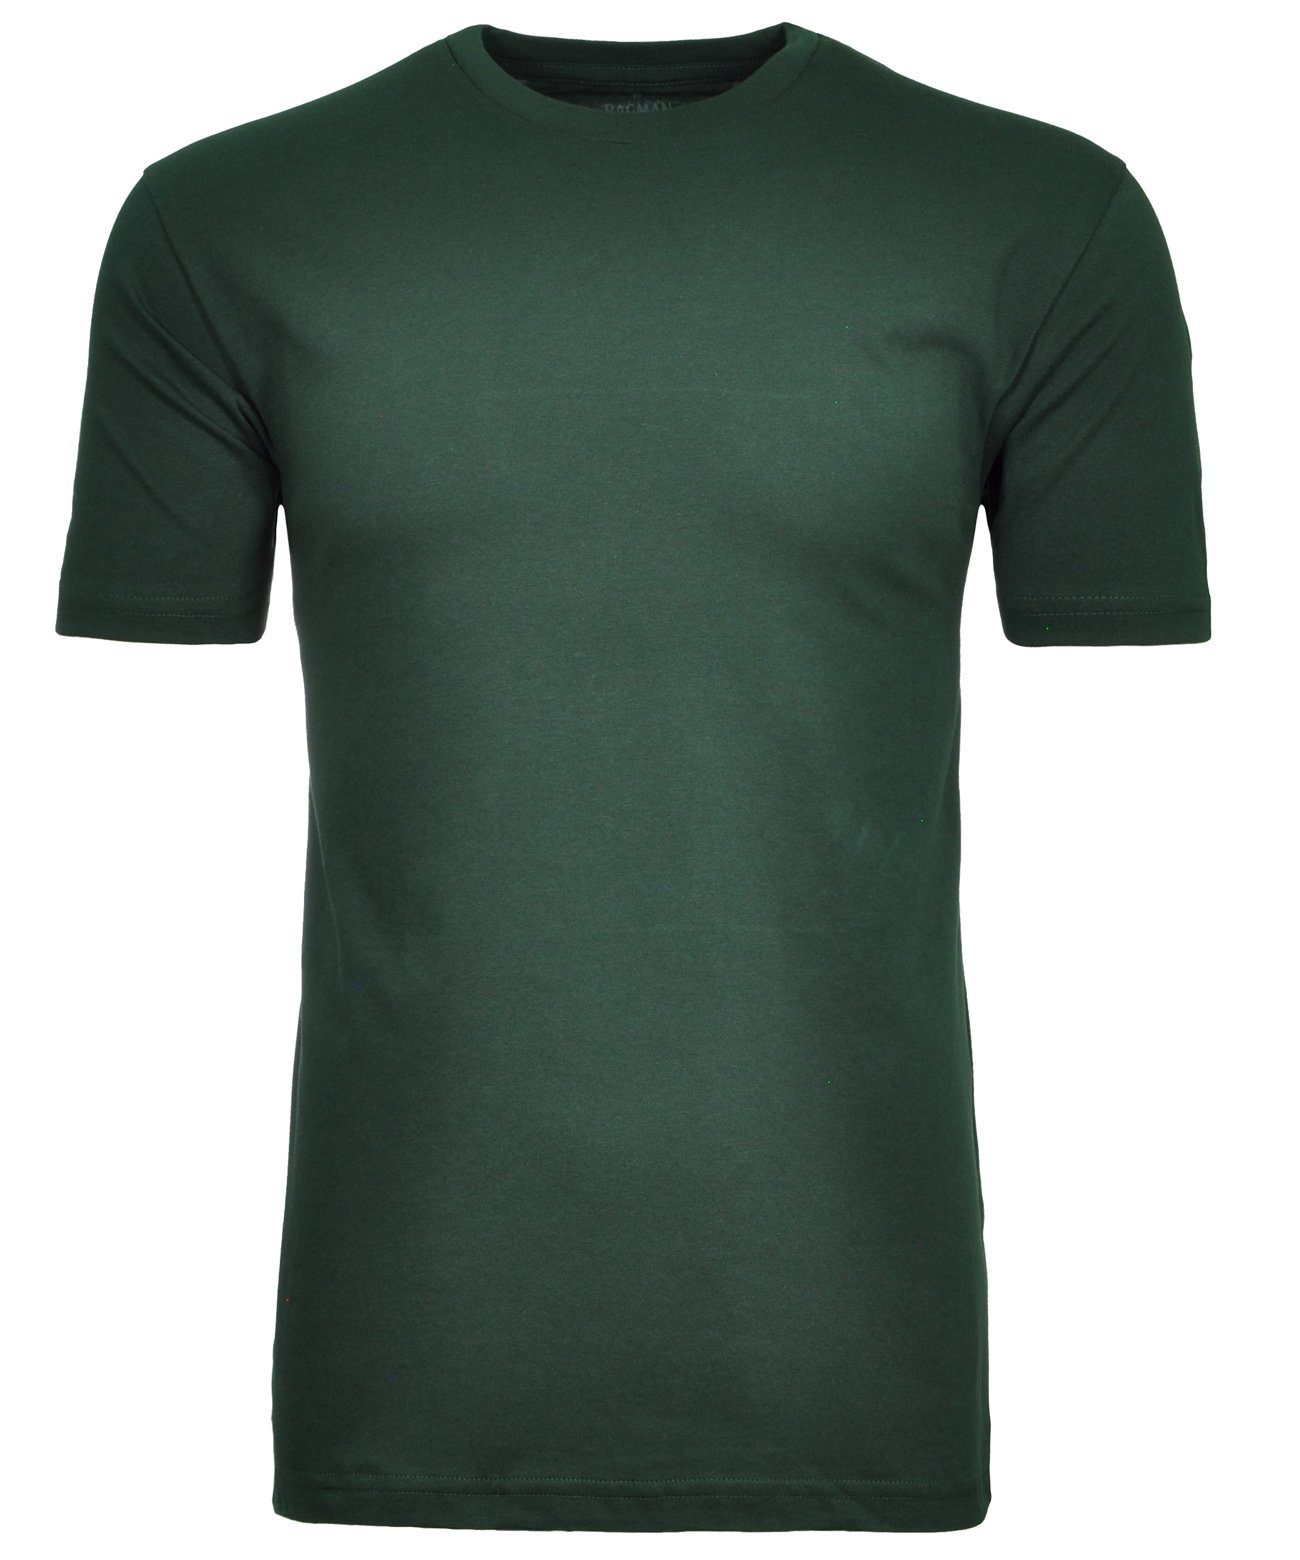 RAGMAN Longshirt Dunkelgrün-386 | T-Shirts